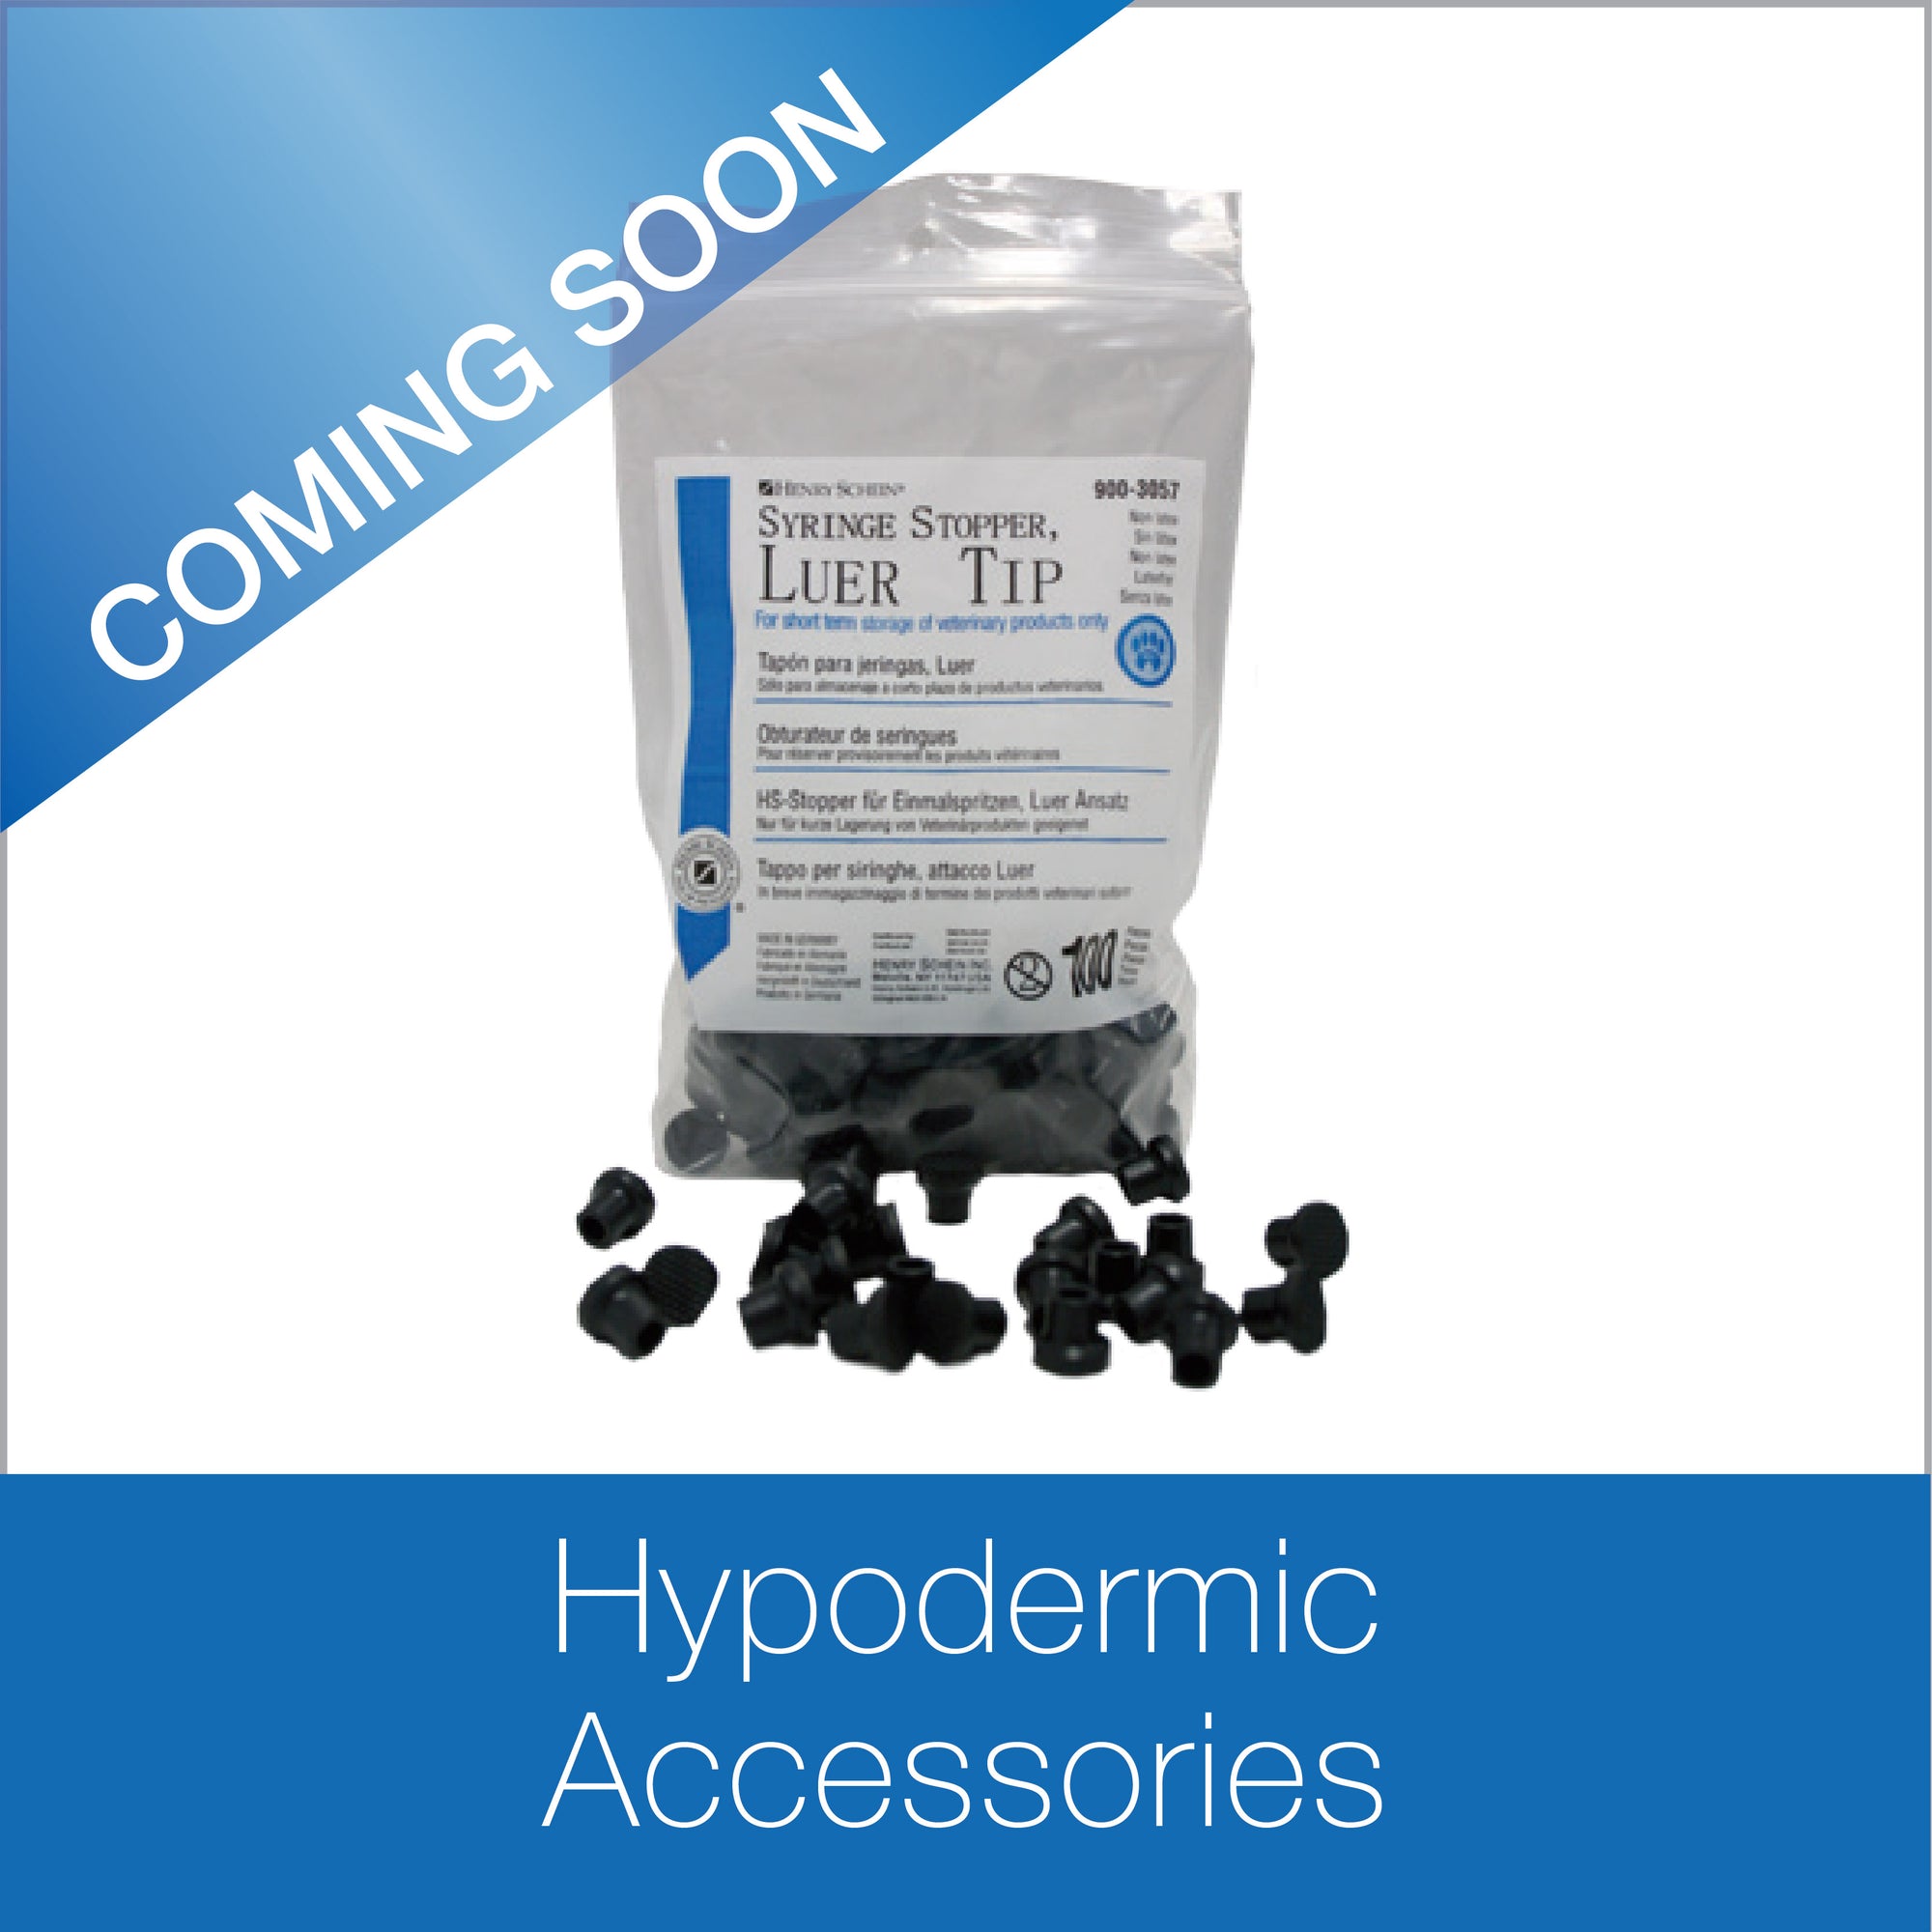 Hypodermic Accessories